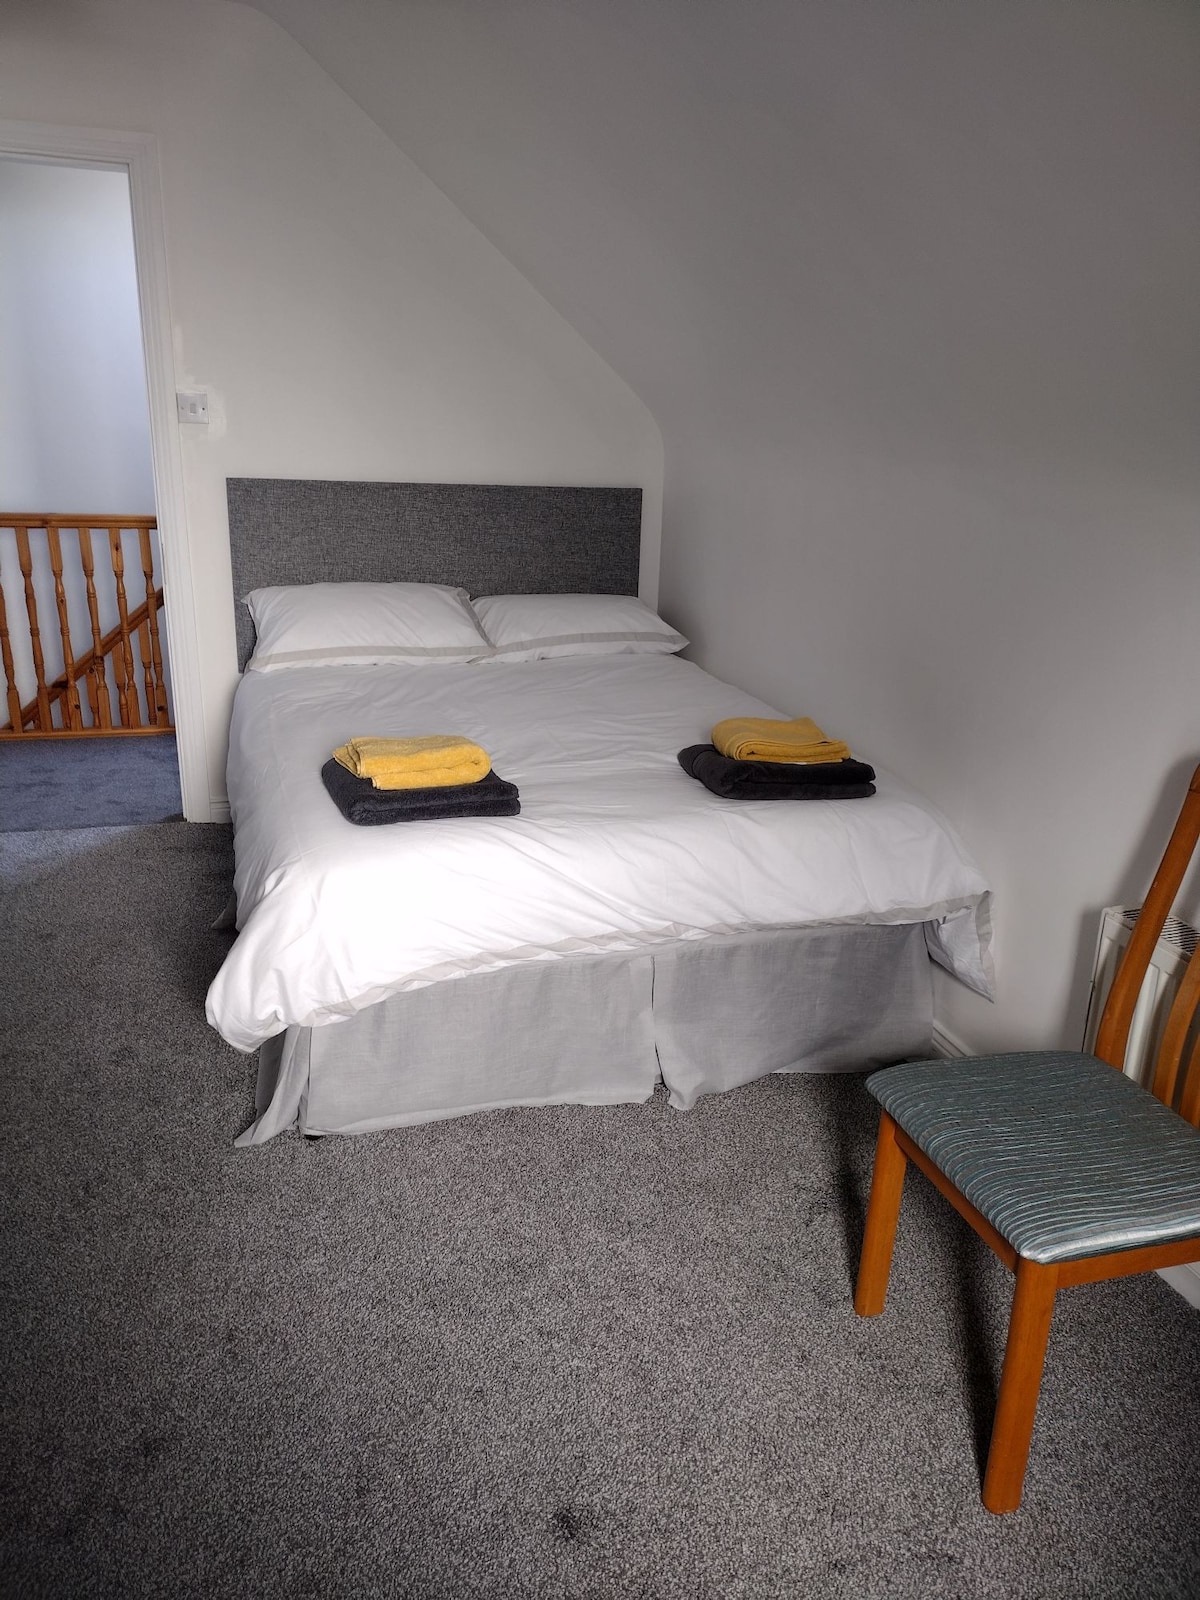 4 bedroom located in the heart of Killarney